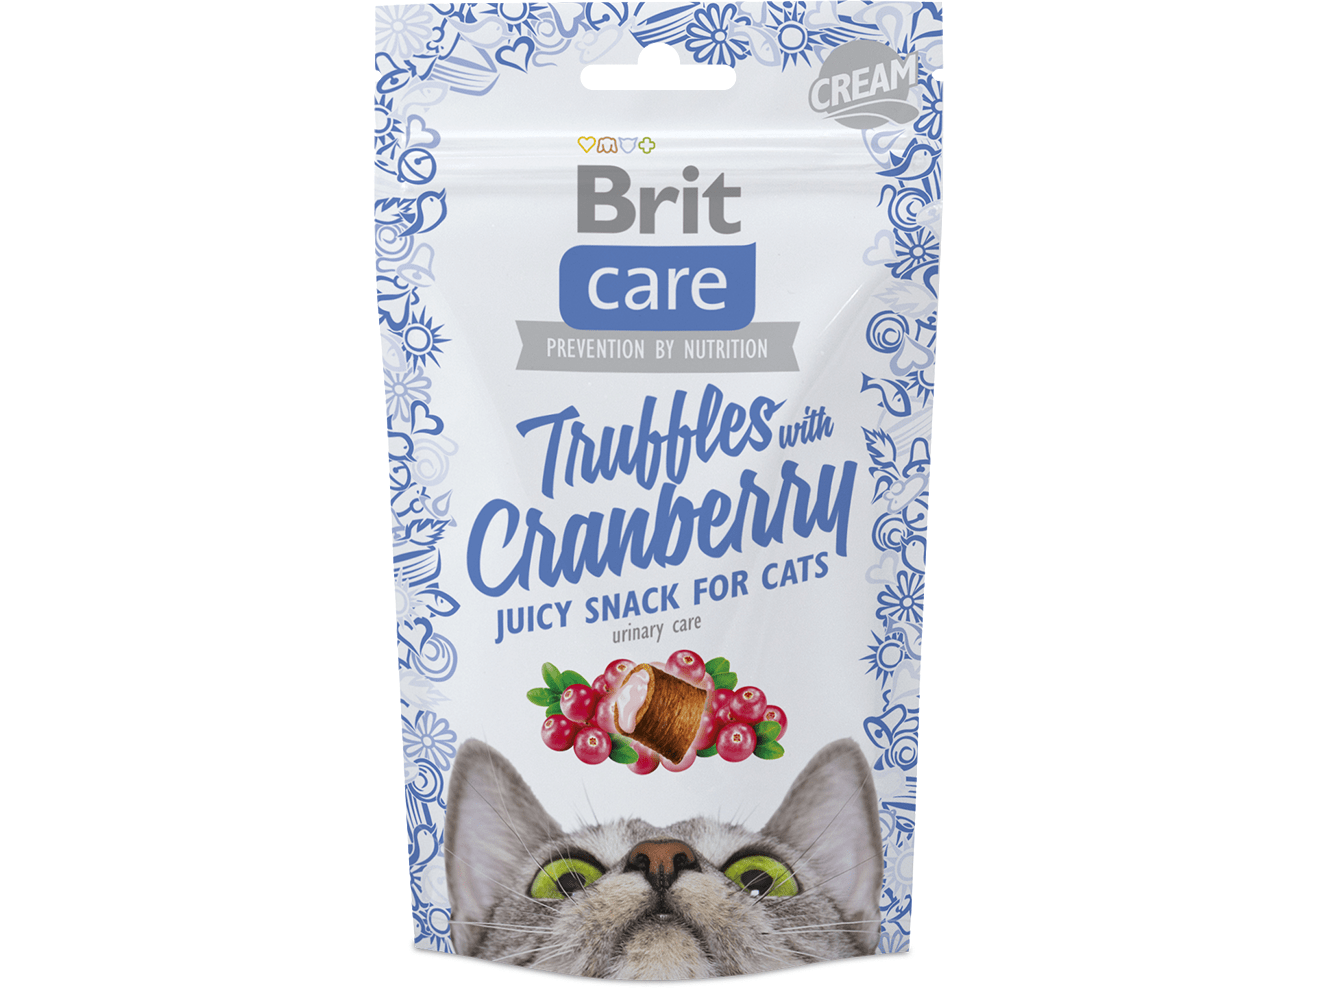 Brit Care Cat Snack Truffles Cranberry 50 g